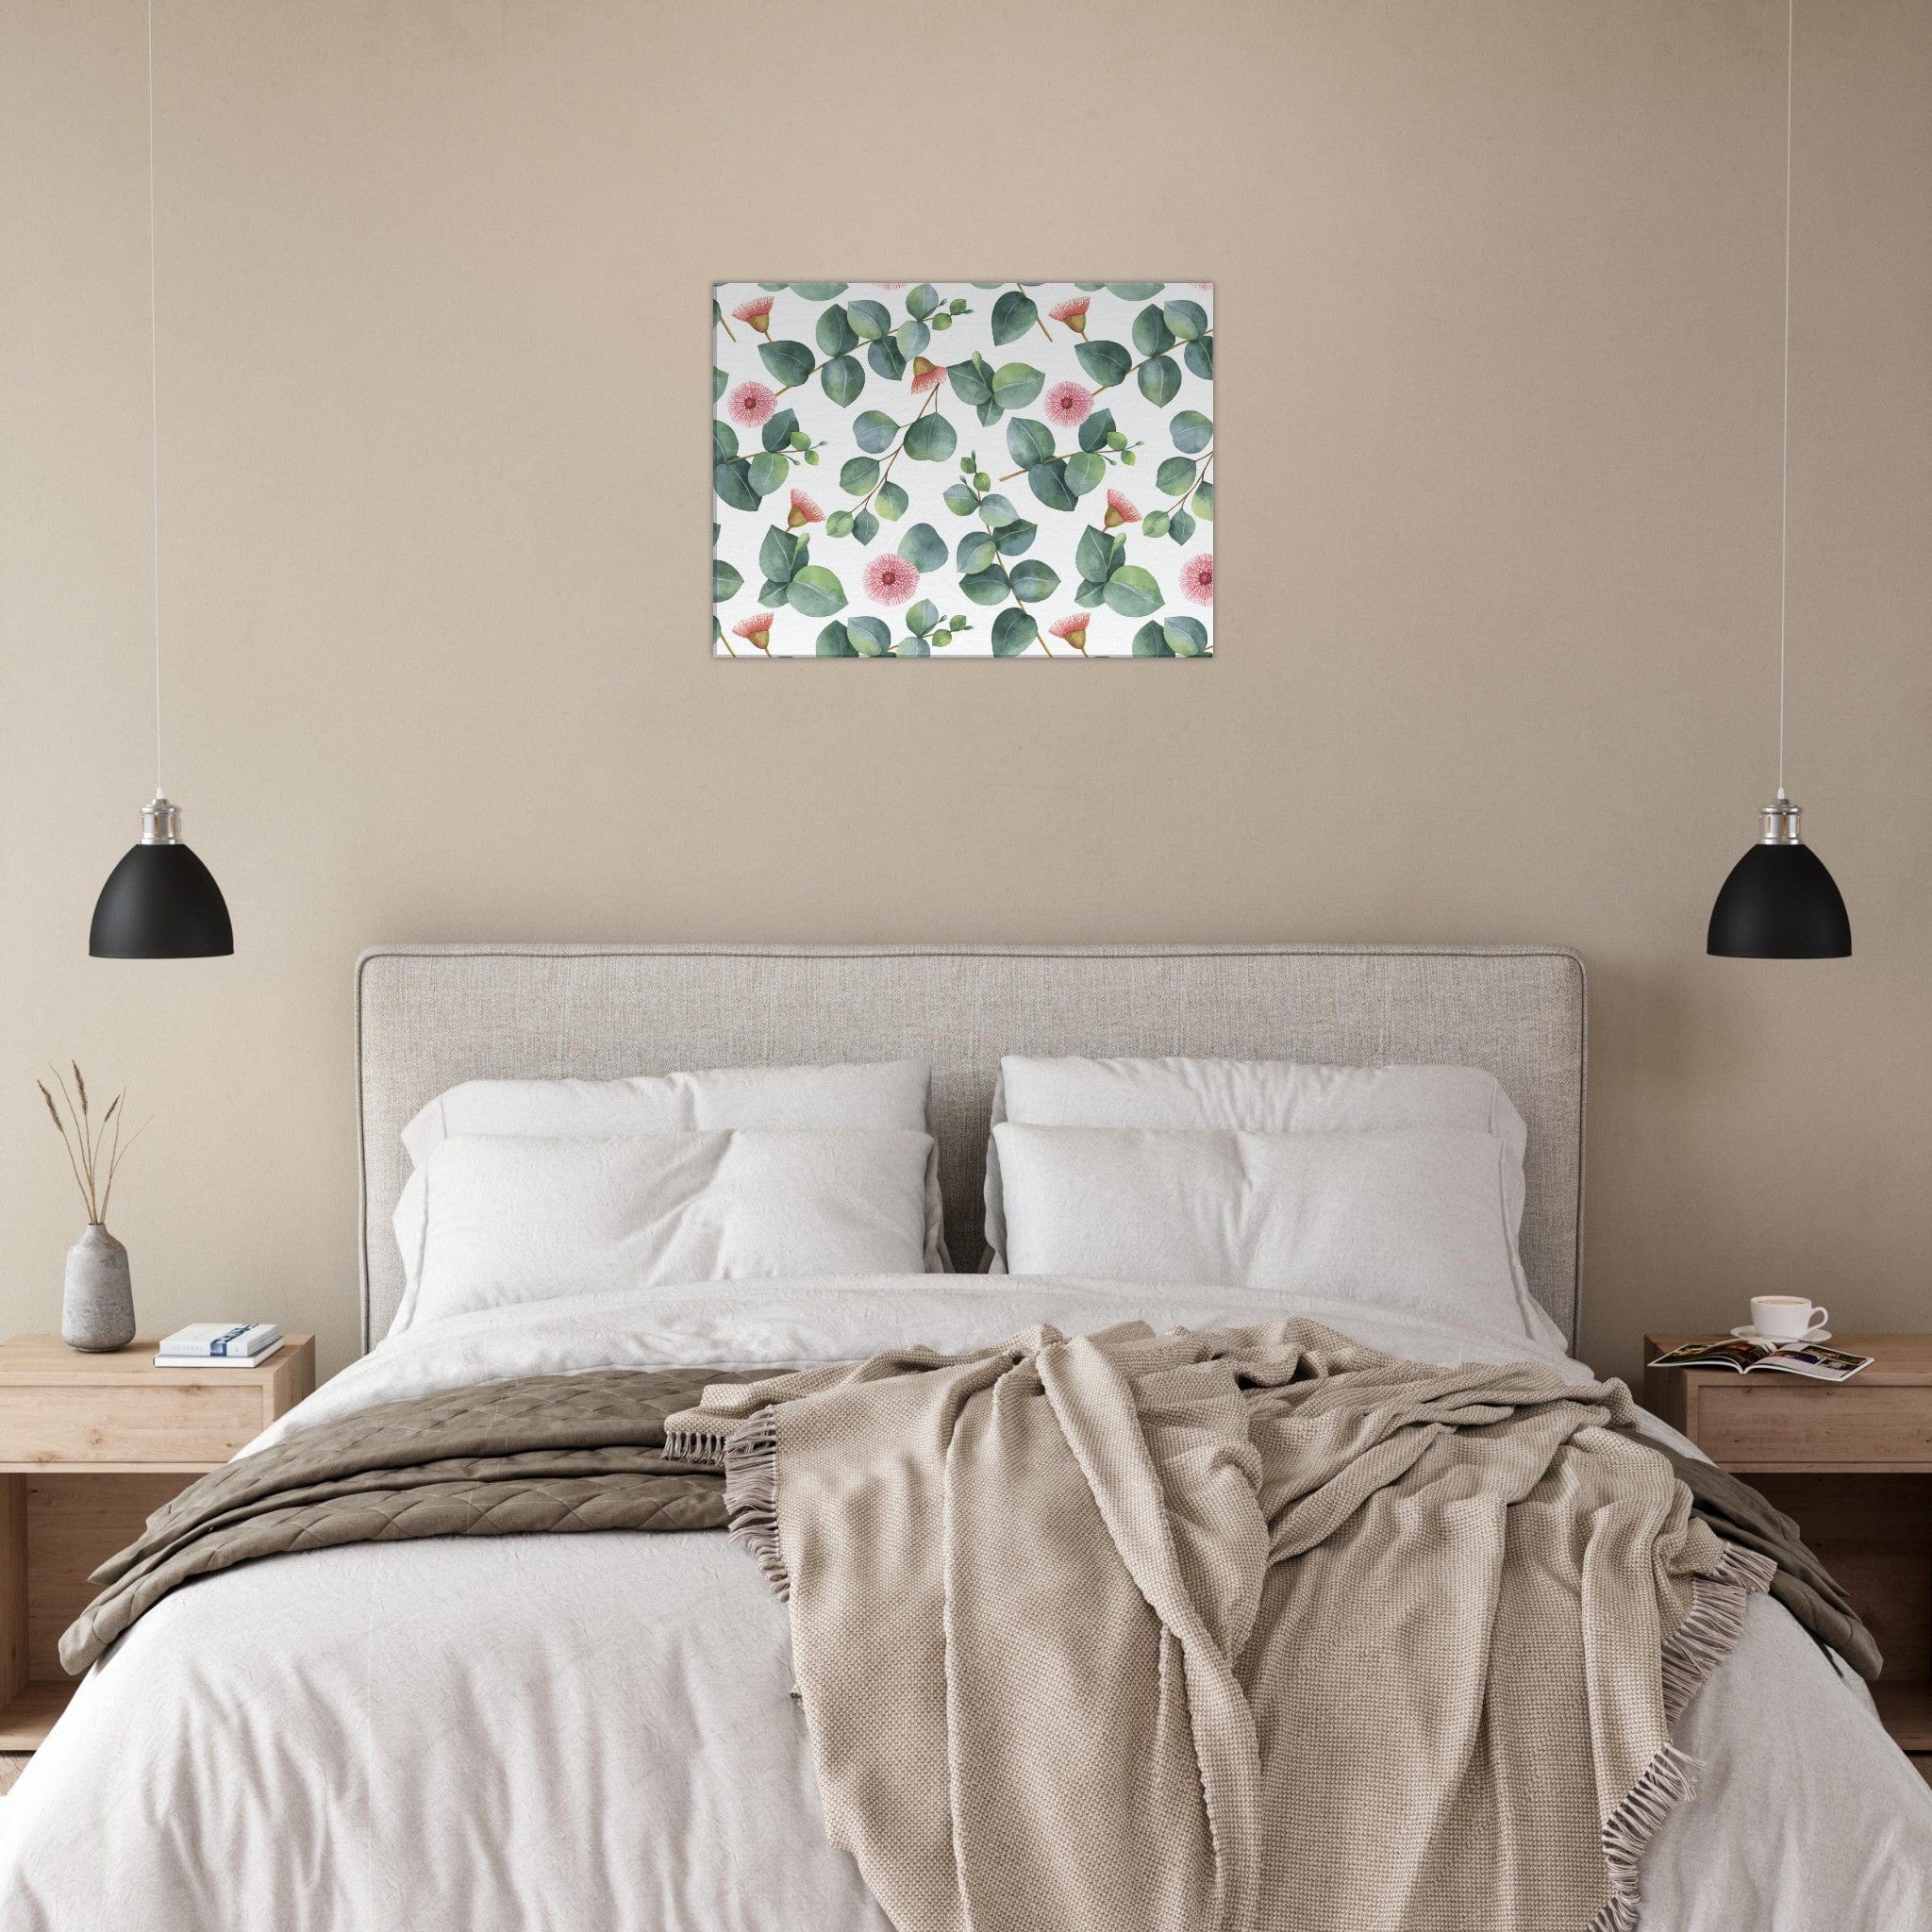 Little Squiffy Print Material 60x80 cm / 24x32″ / Horizontal Eucalyptus Blossom Canvas Wall Art